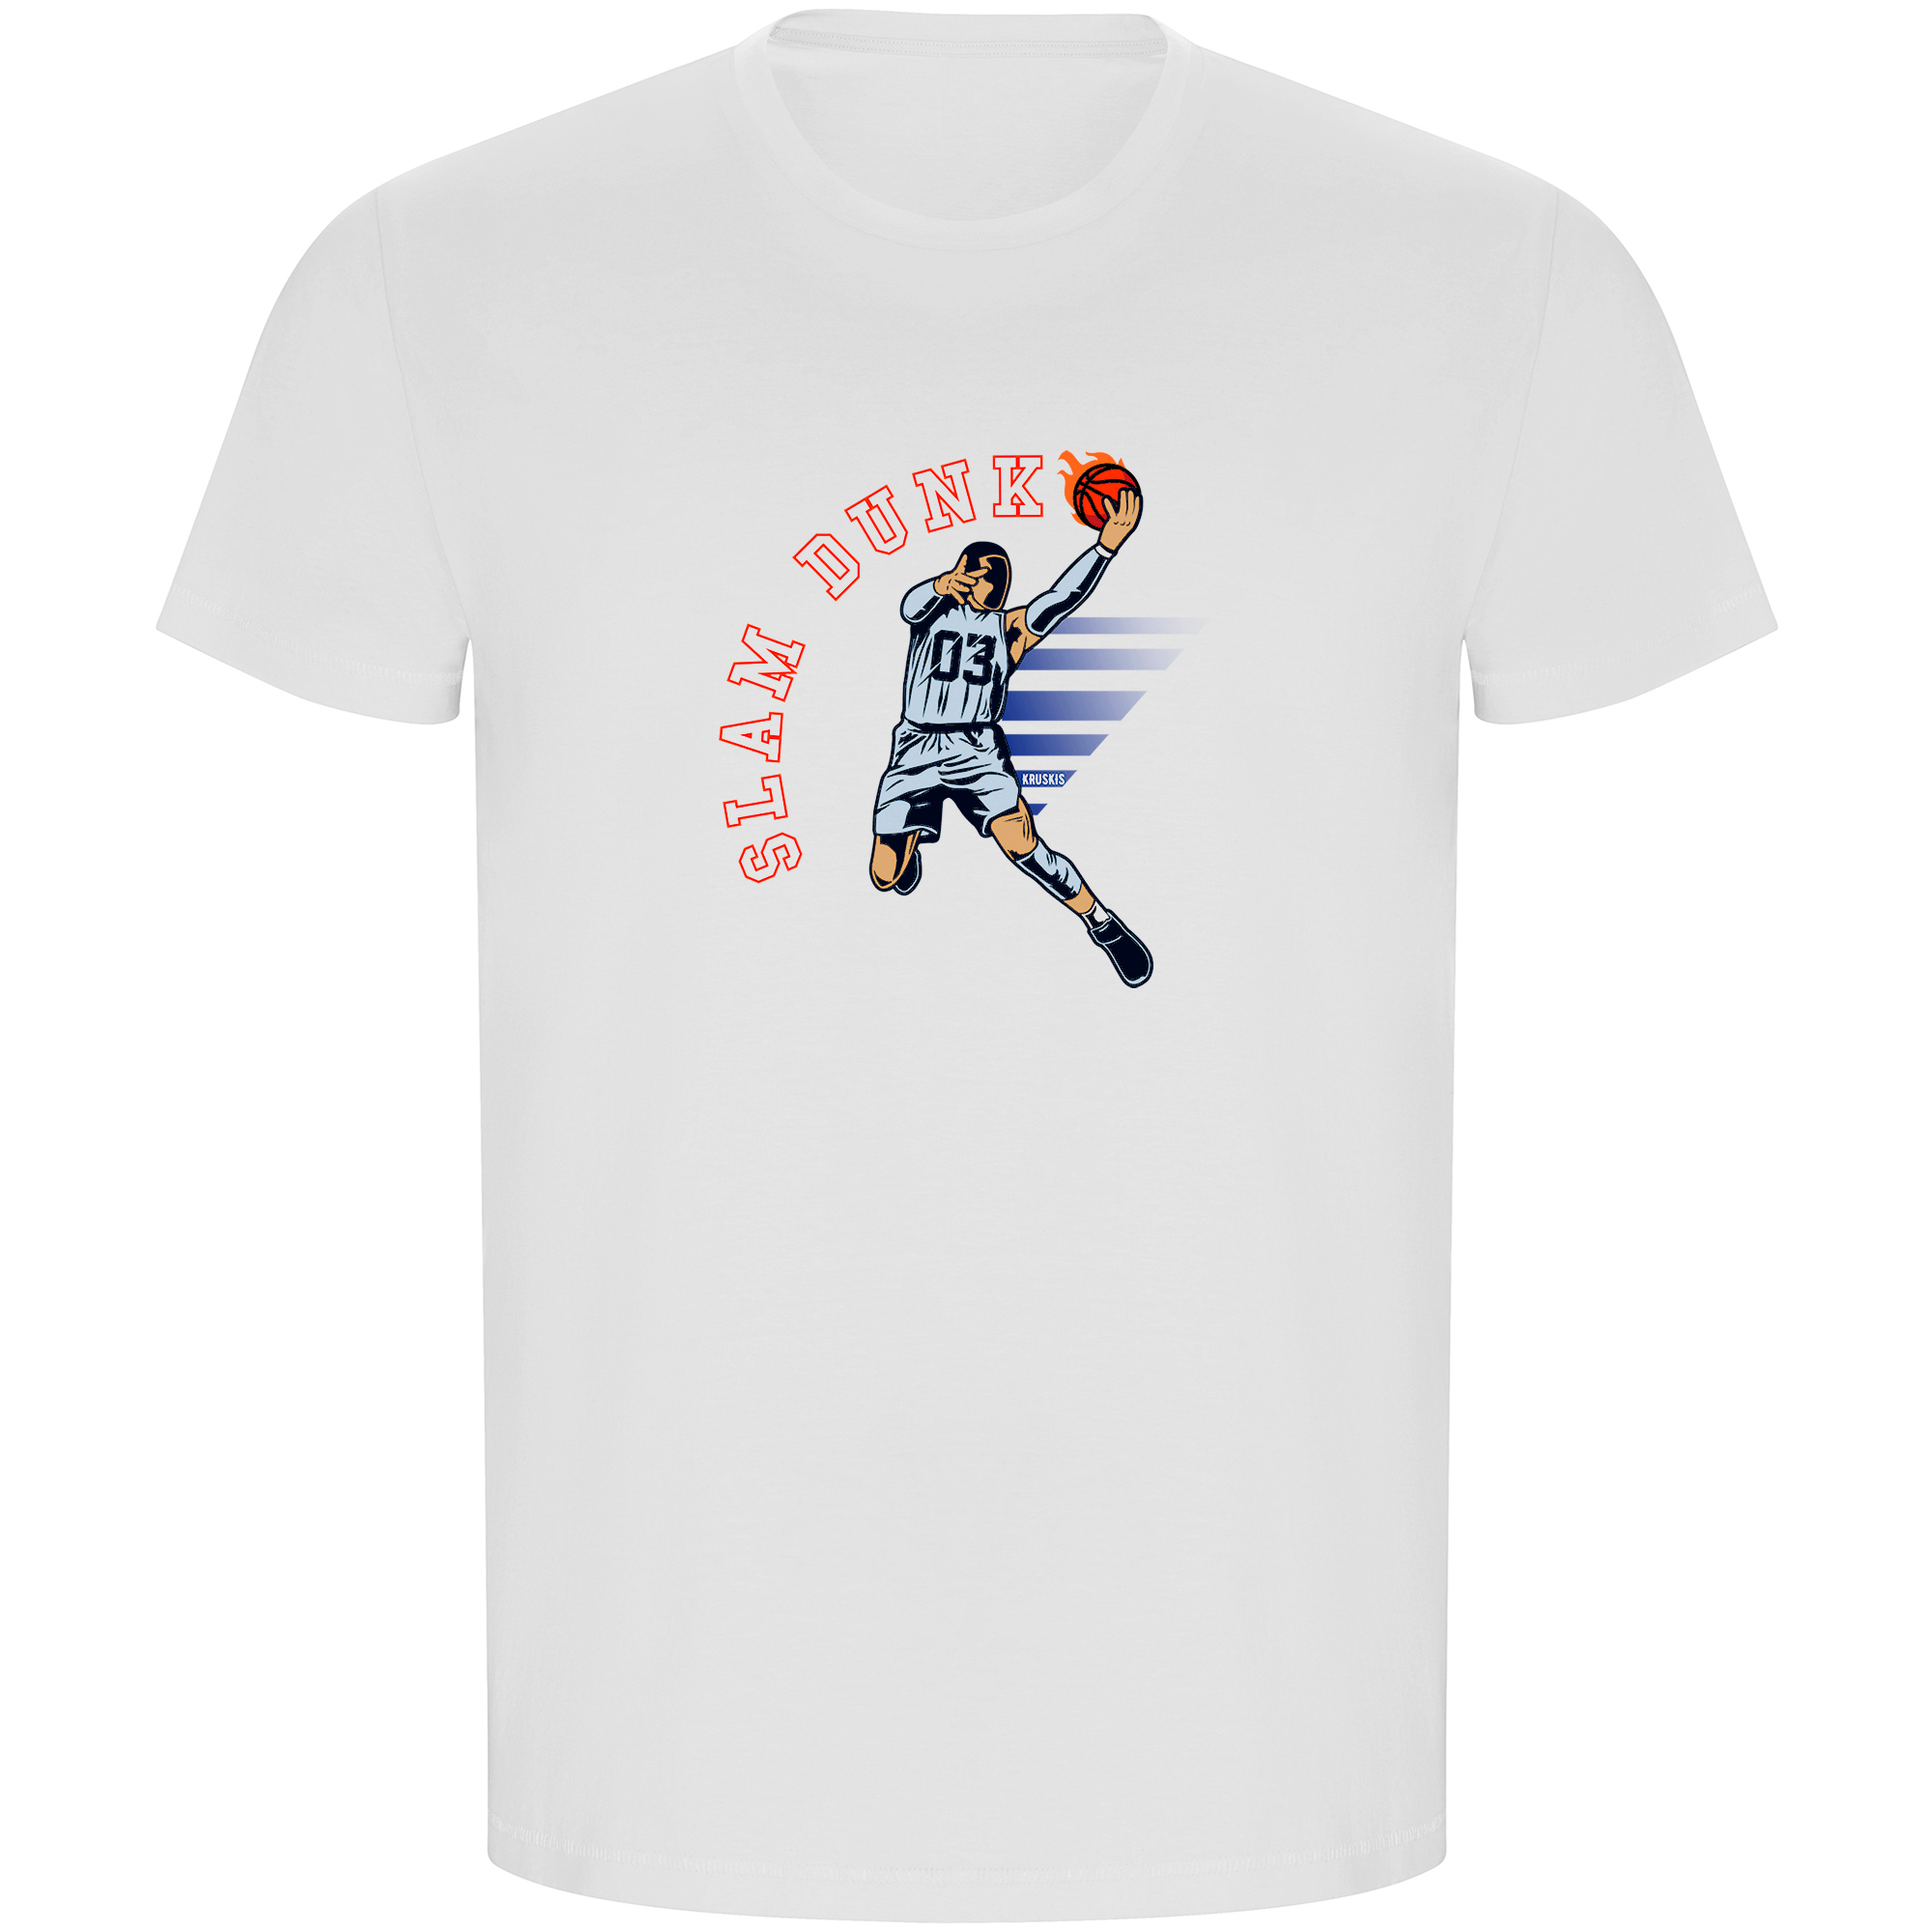 Camiseta ECO Baloncesto Slam Dunk Manga Corta Hombre